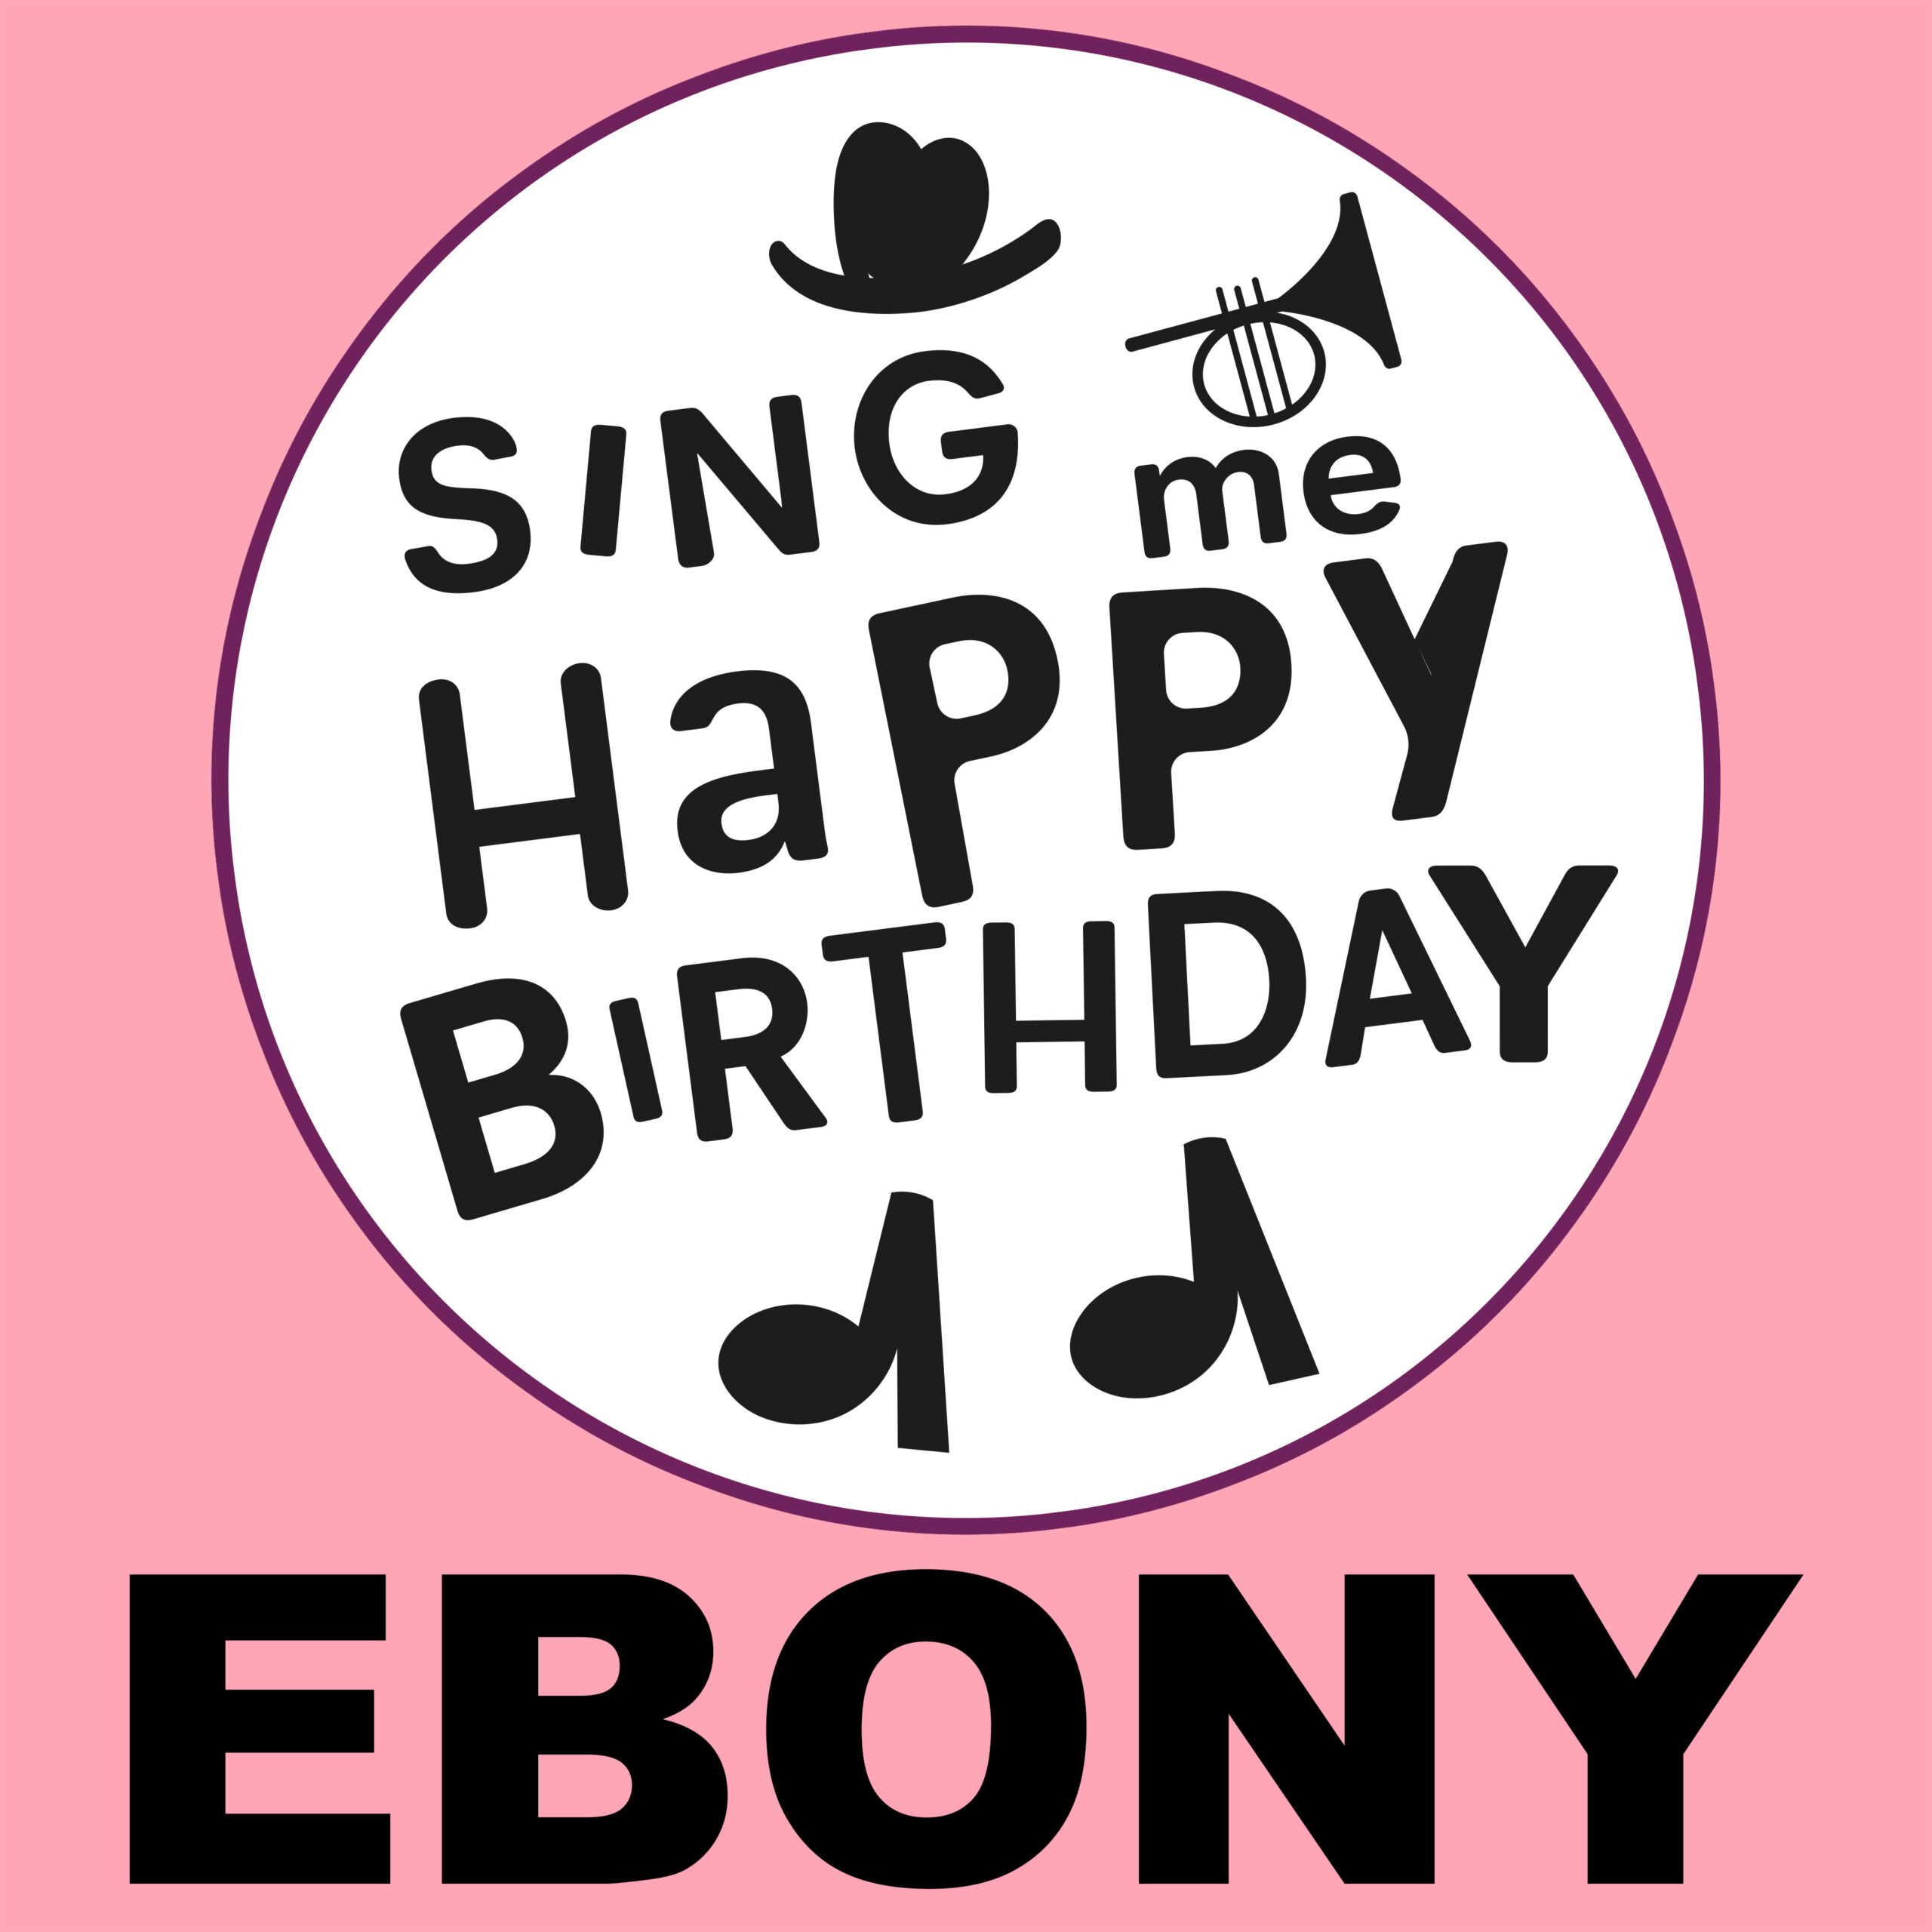 Happy birthday my ebony